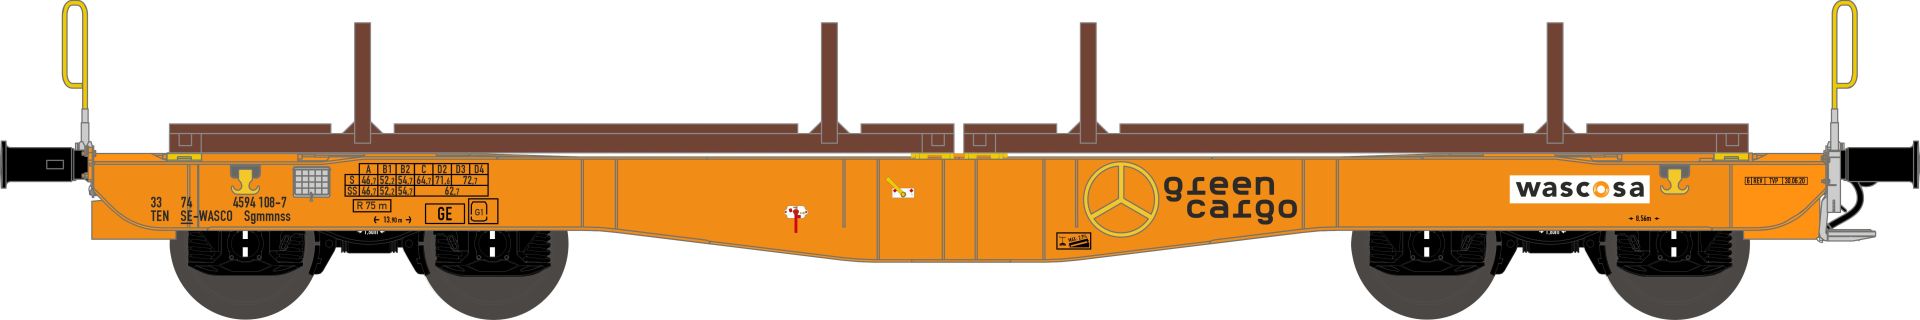 nme 560603 - Containertragwagen 41', WASCOSA - GREEN CARGO, Ep.VI